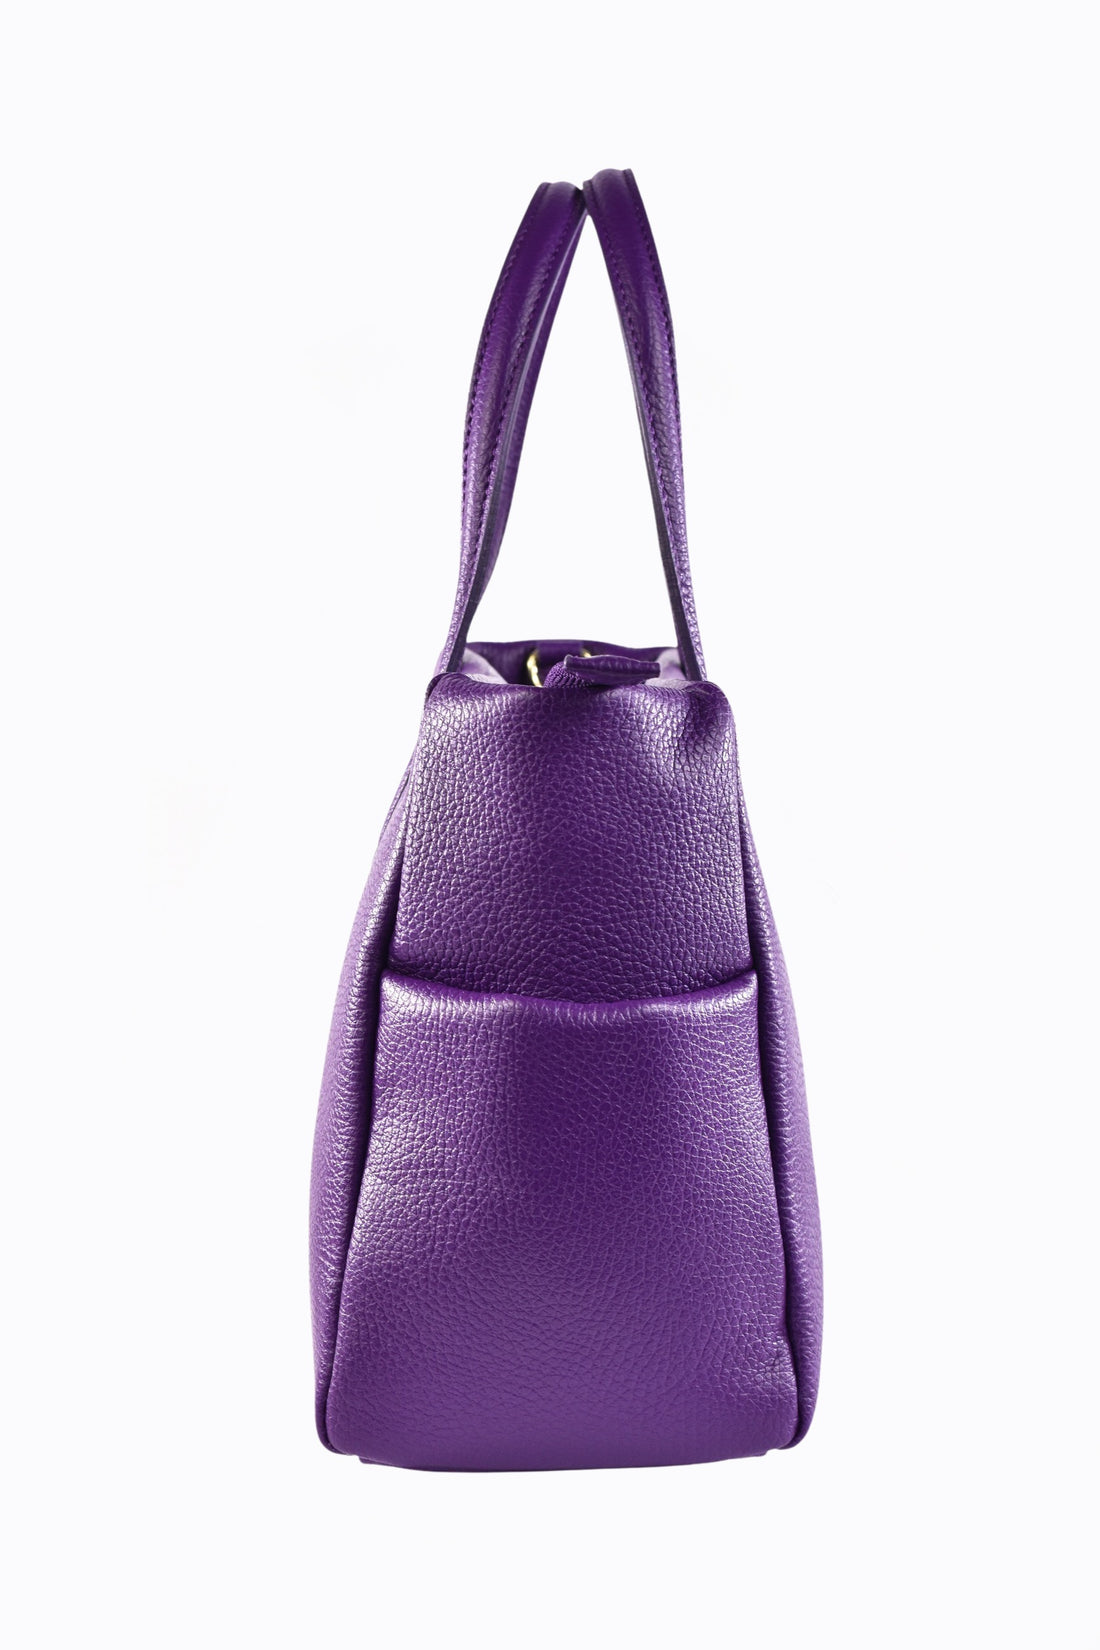 Diana bag in Purple Dollar leather